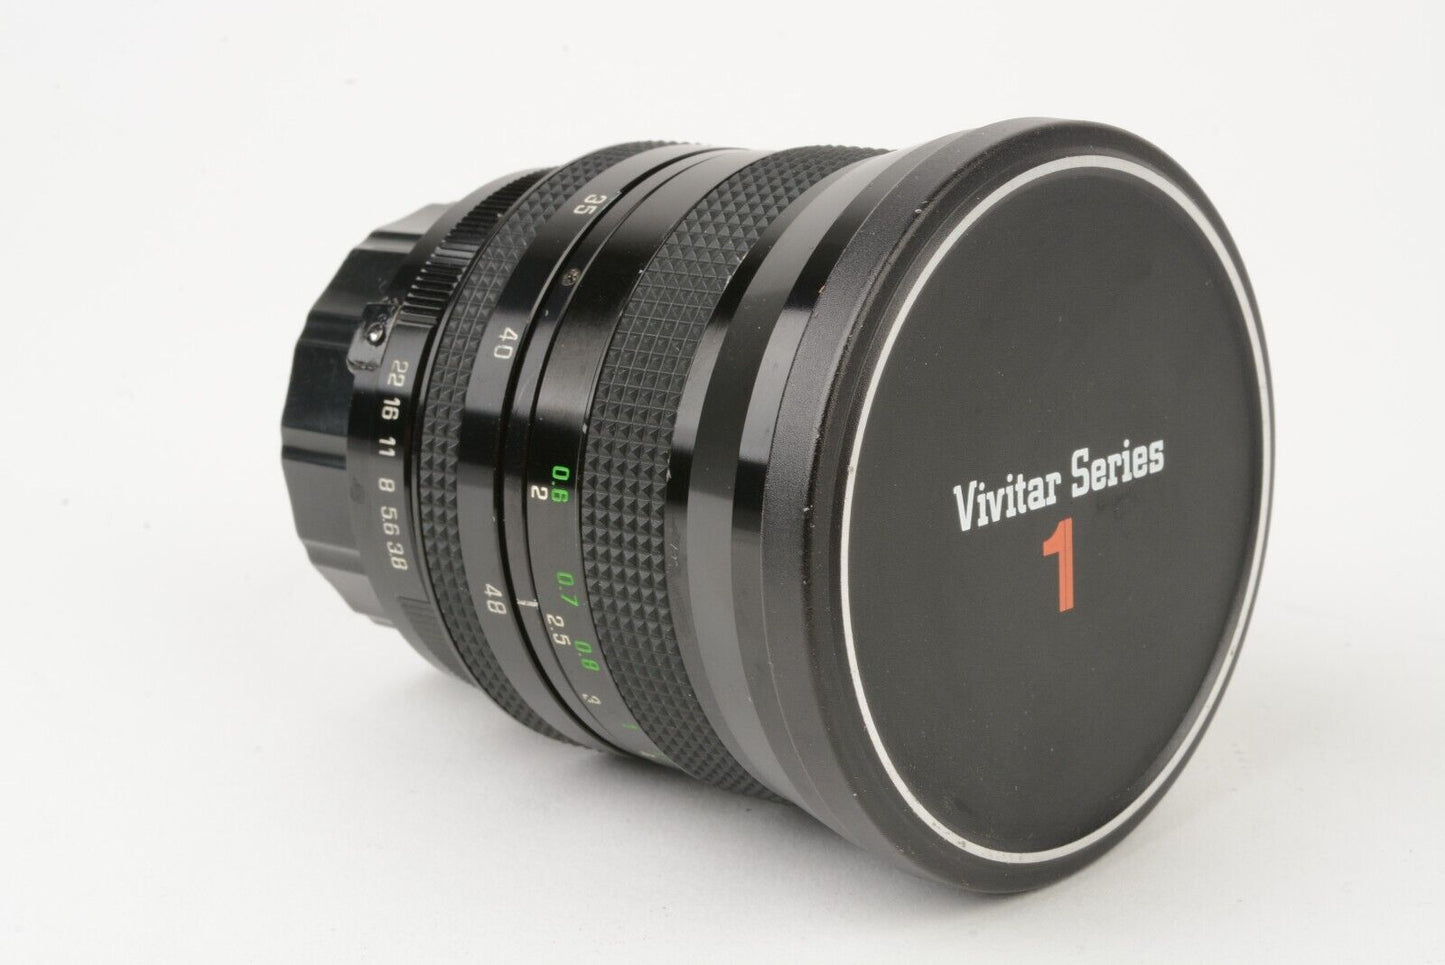 EXC++ VIVITAR VMC 24-48mm f3.8 SERIES 1 LENS NIKON F MOUNT, CAPS, CLEAN & SHARP